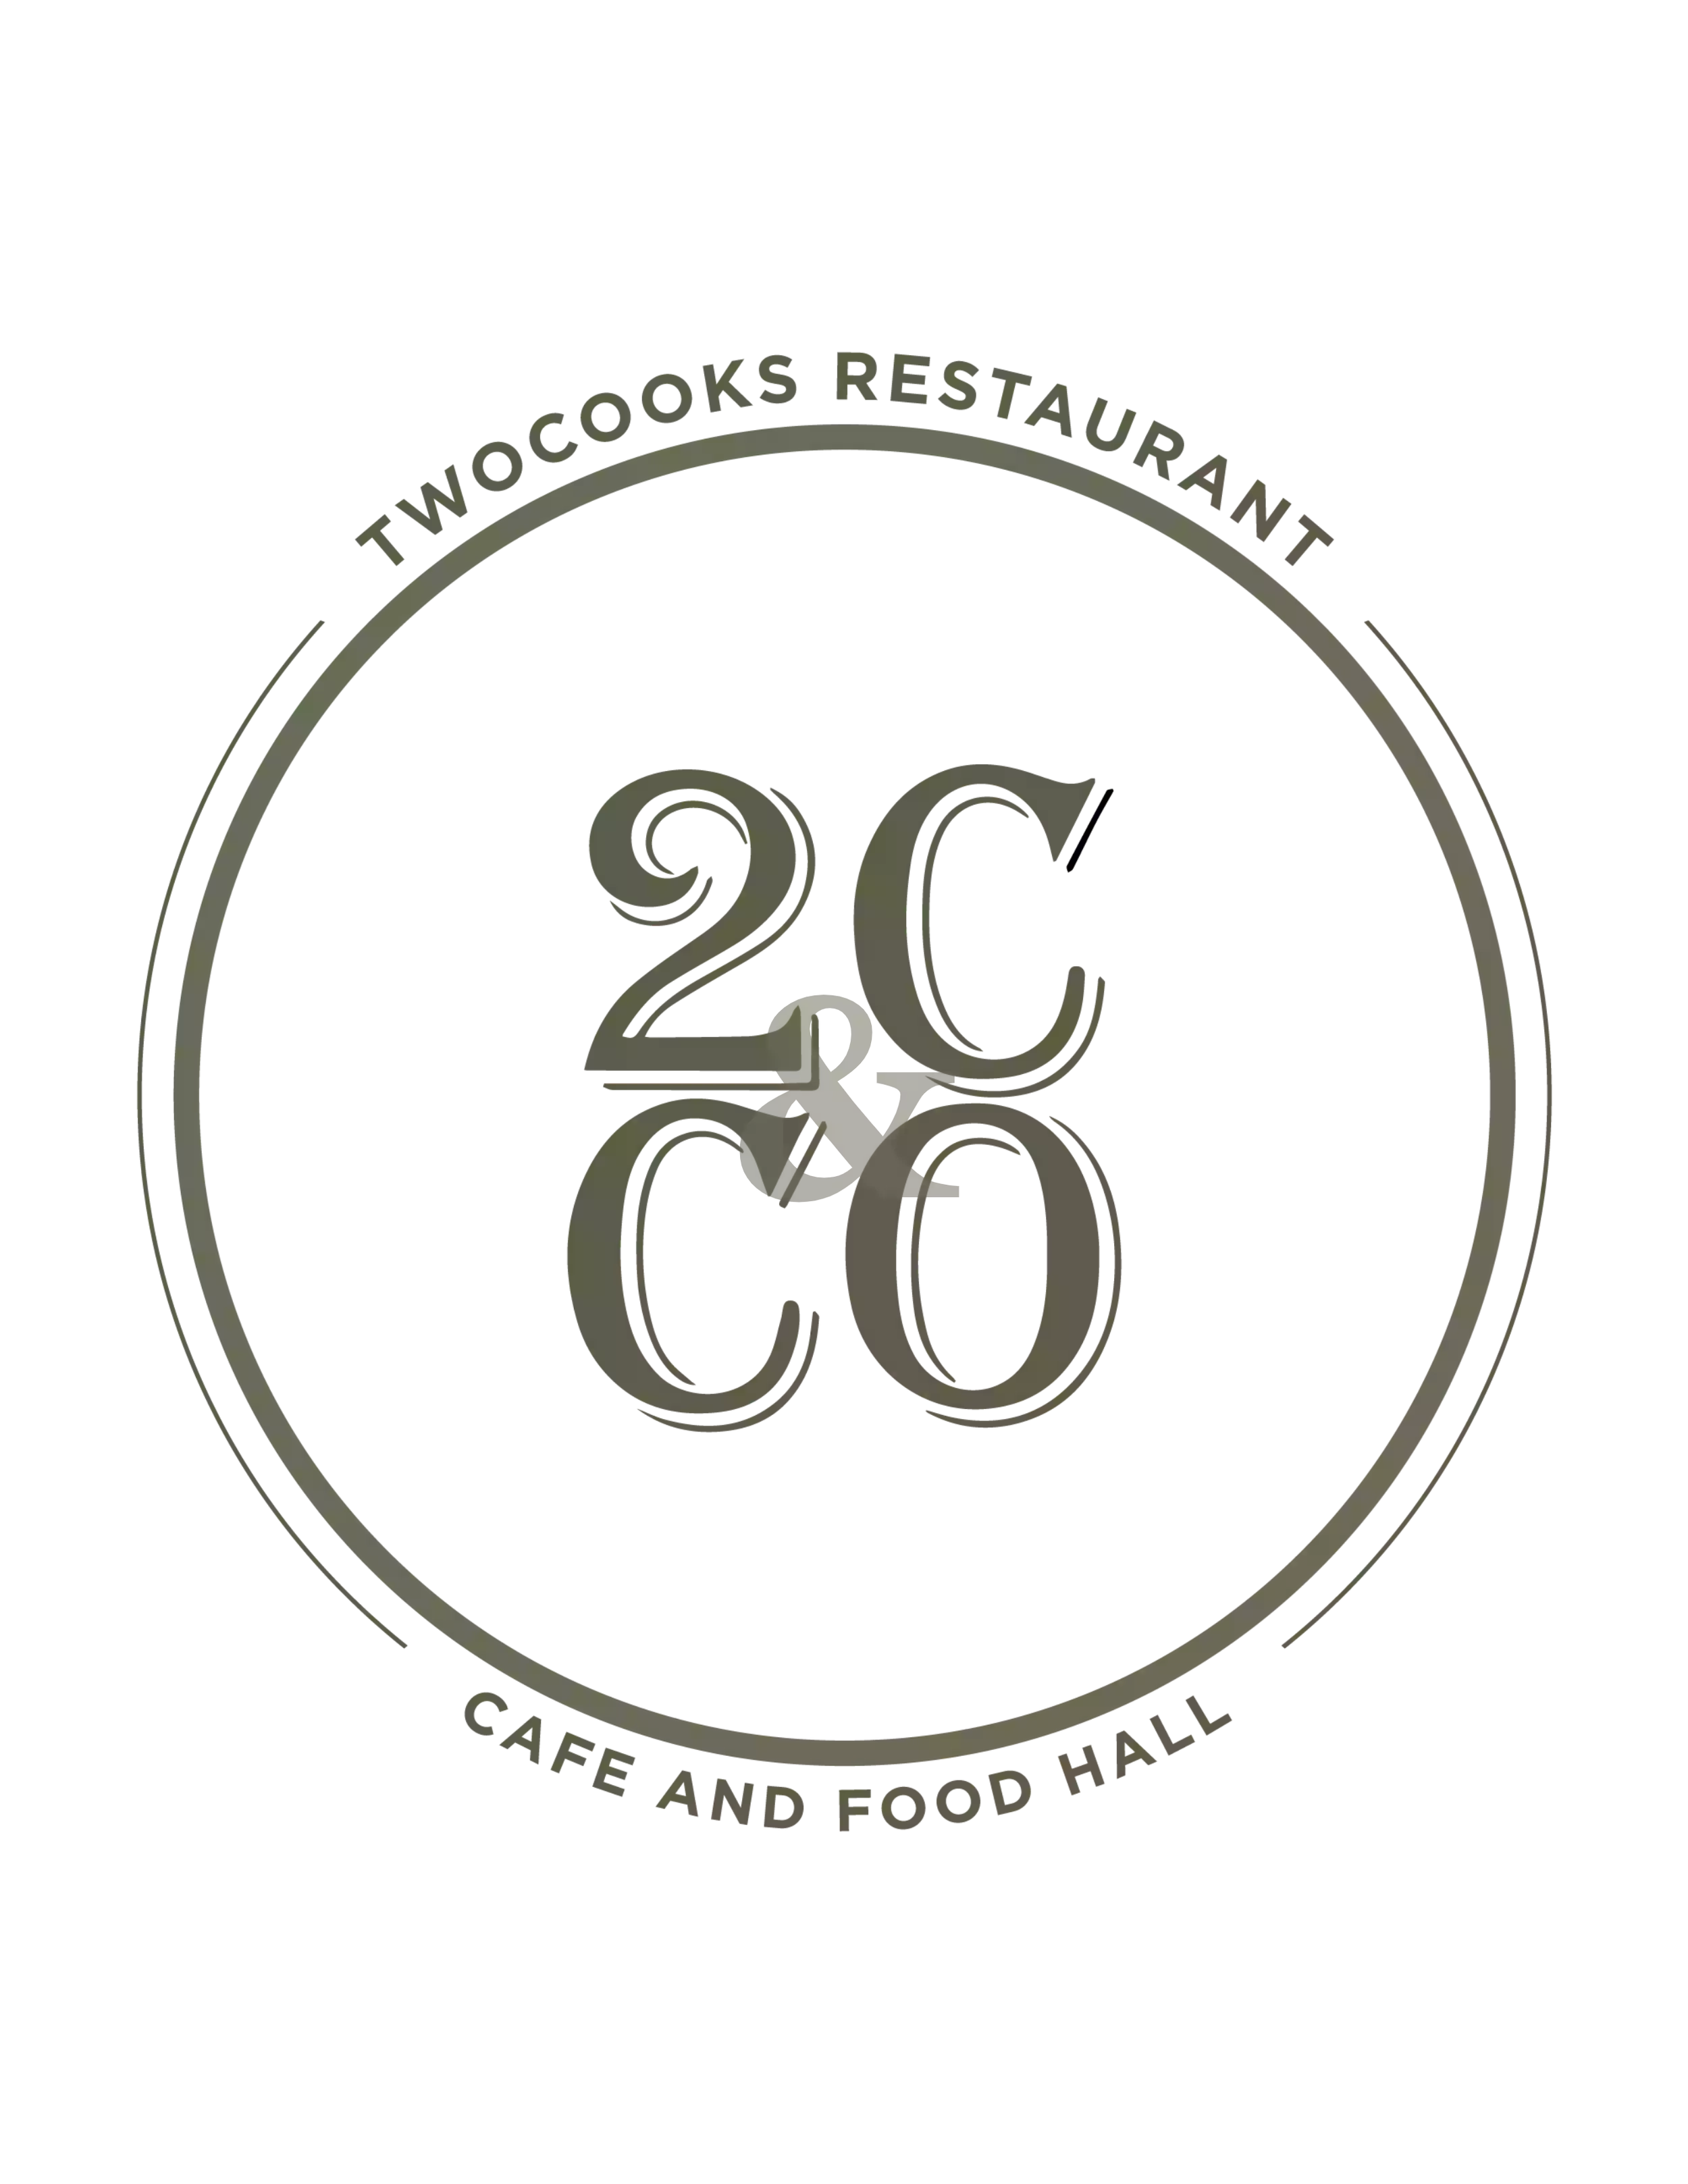 2C Cafe and Food Hall